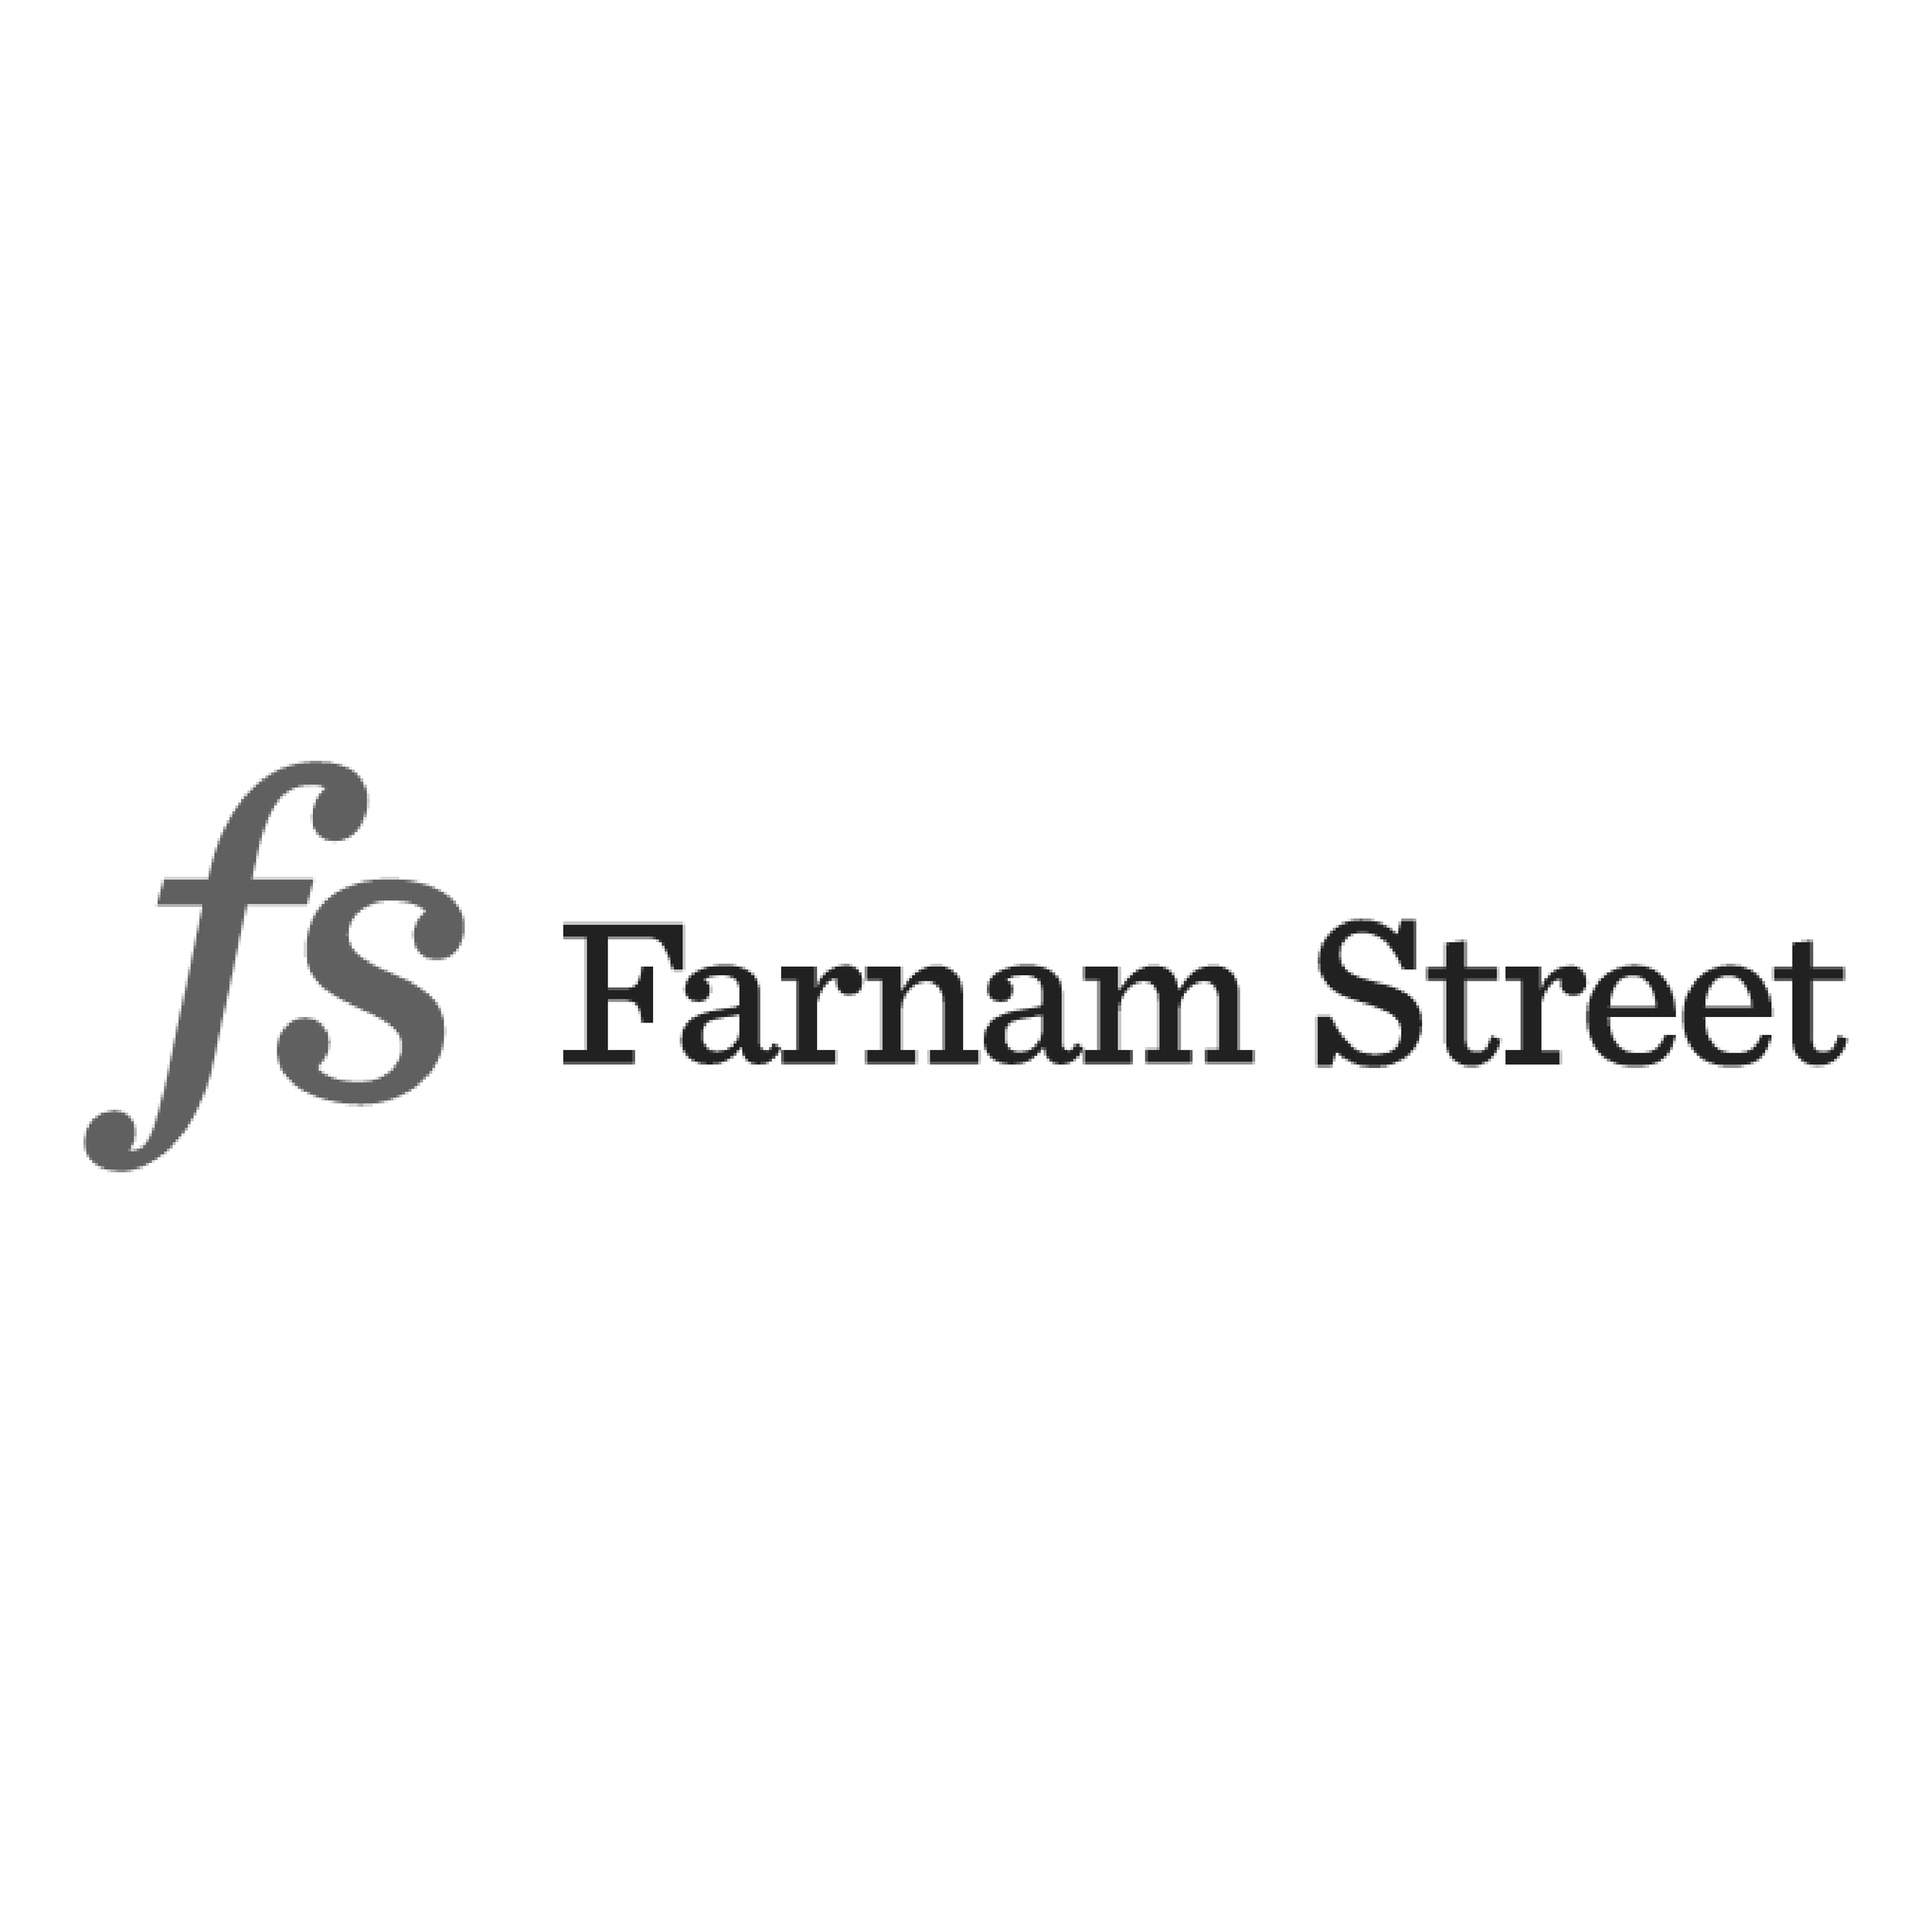 Farnam Street